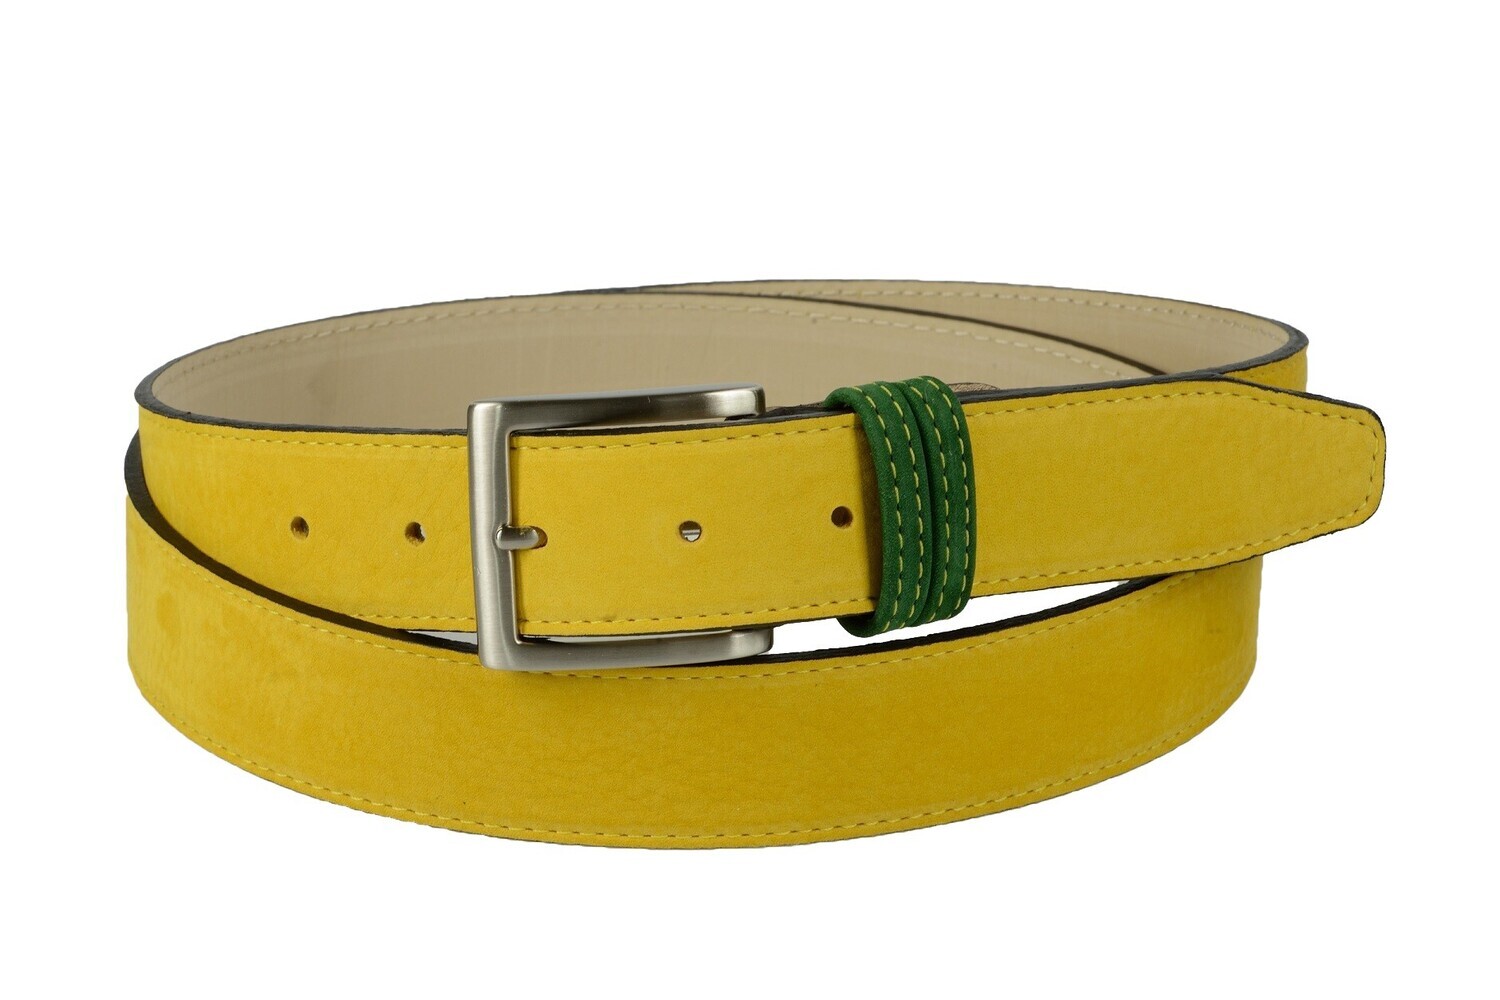 Cintura bicolore in pelle nabuk: gialla con passante verde